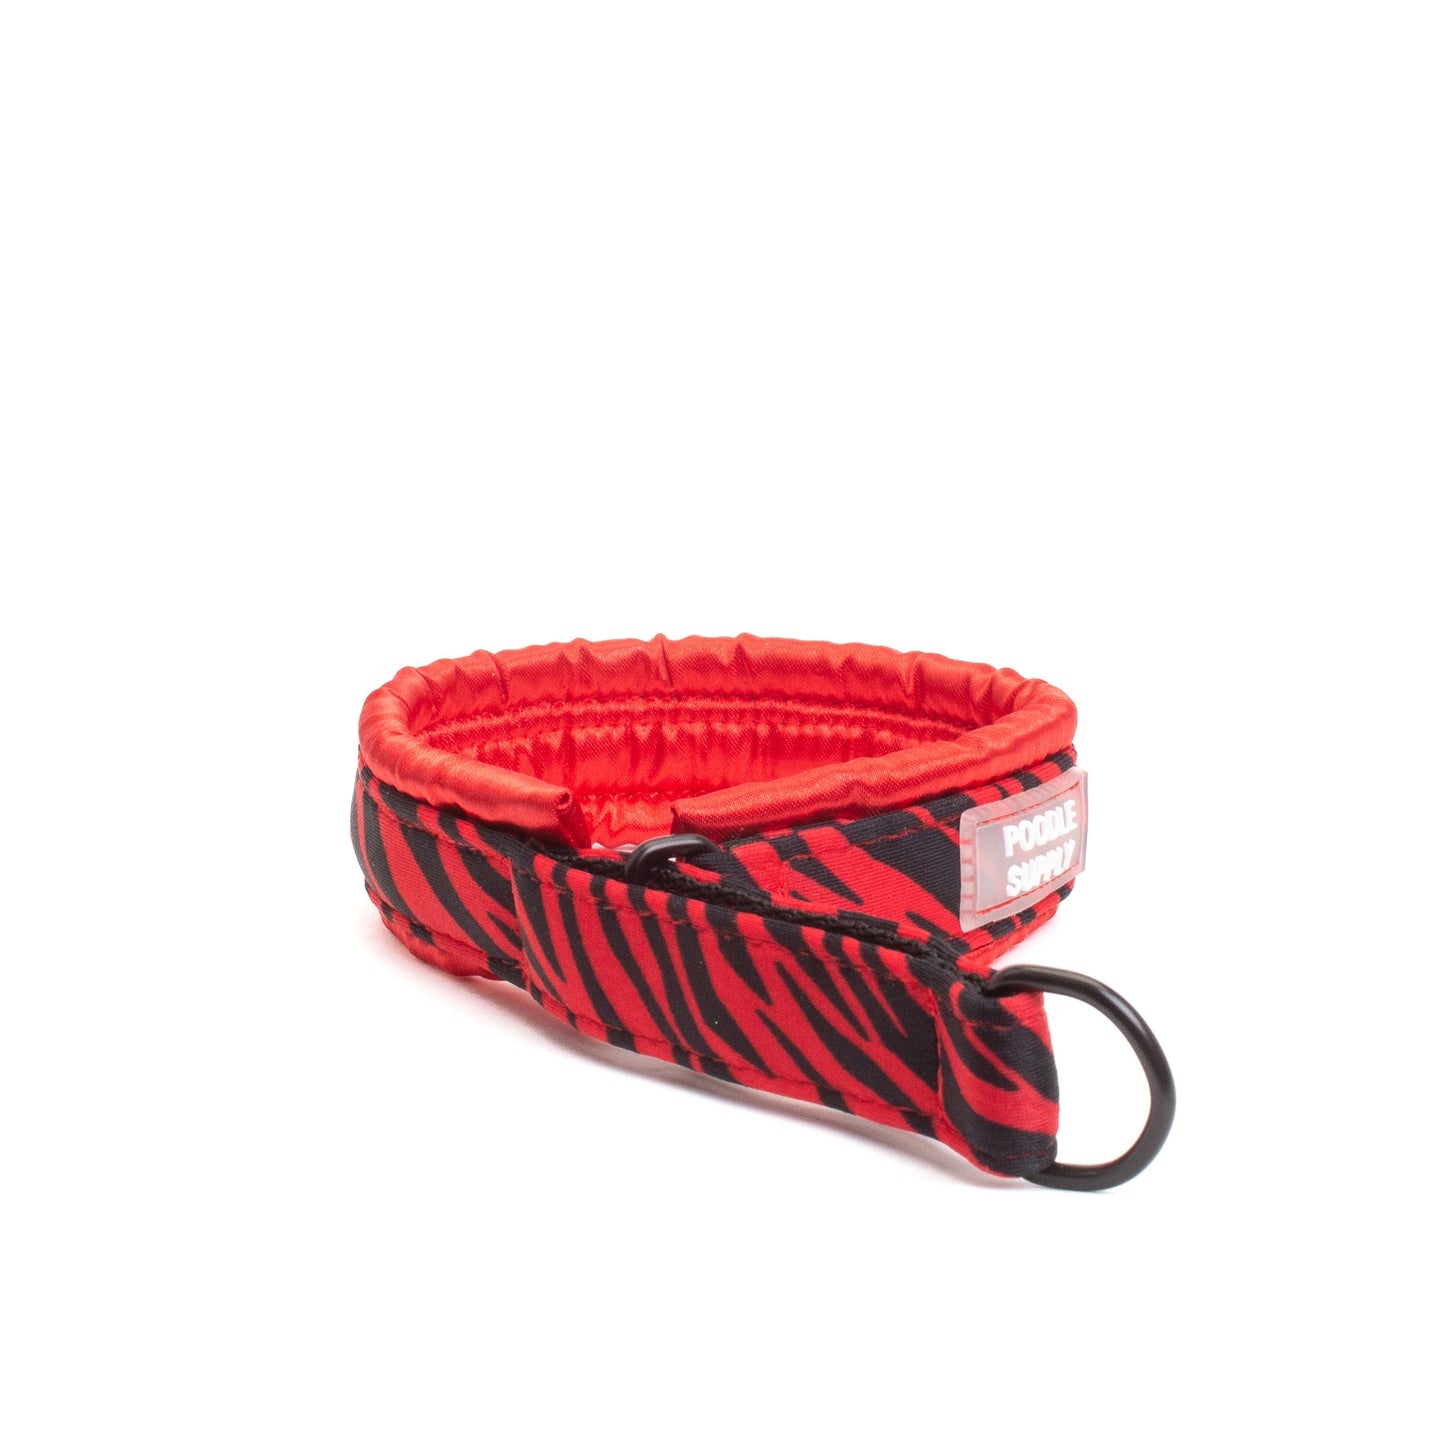 Small / Medium Martingale Collar Poodle Supply Red Zebra